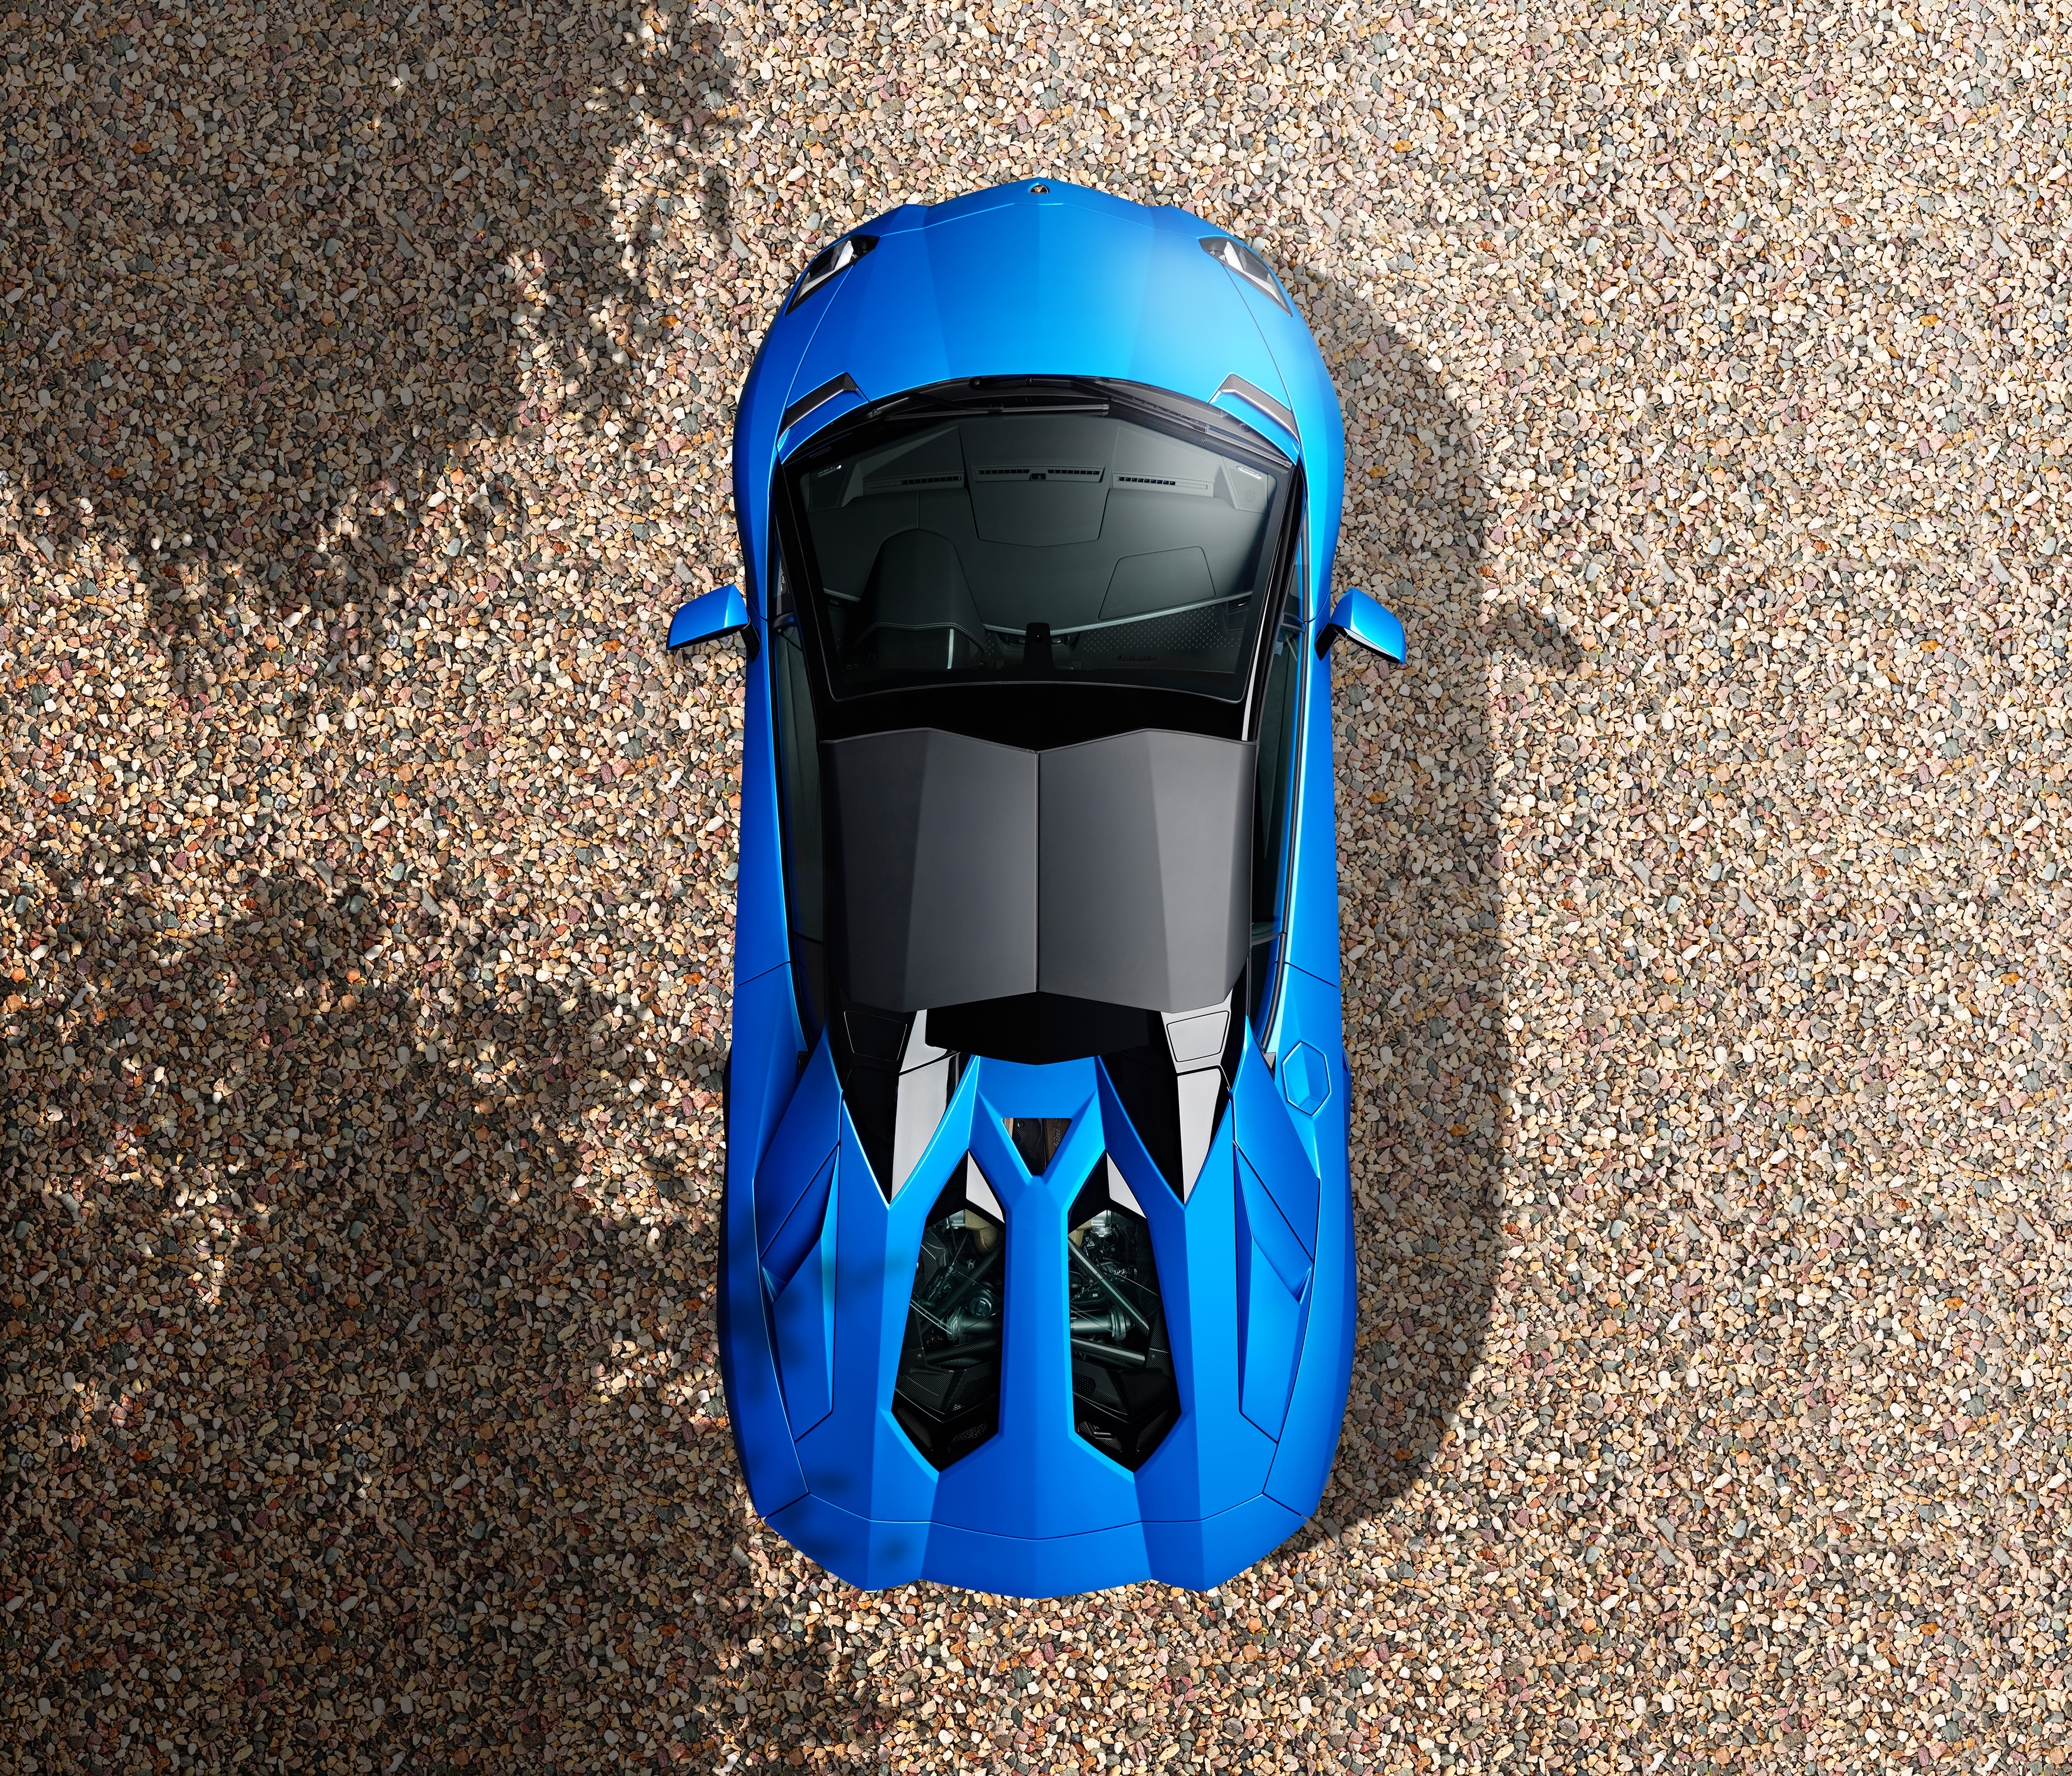 General 3500x3000 pebbles car vehicle shadow Lamborghini blue aerial view outdoors blue cars top view sunlight digital art